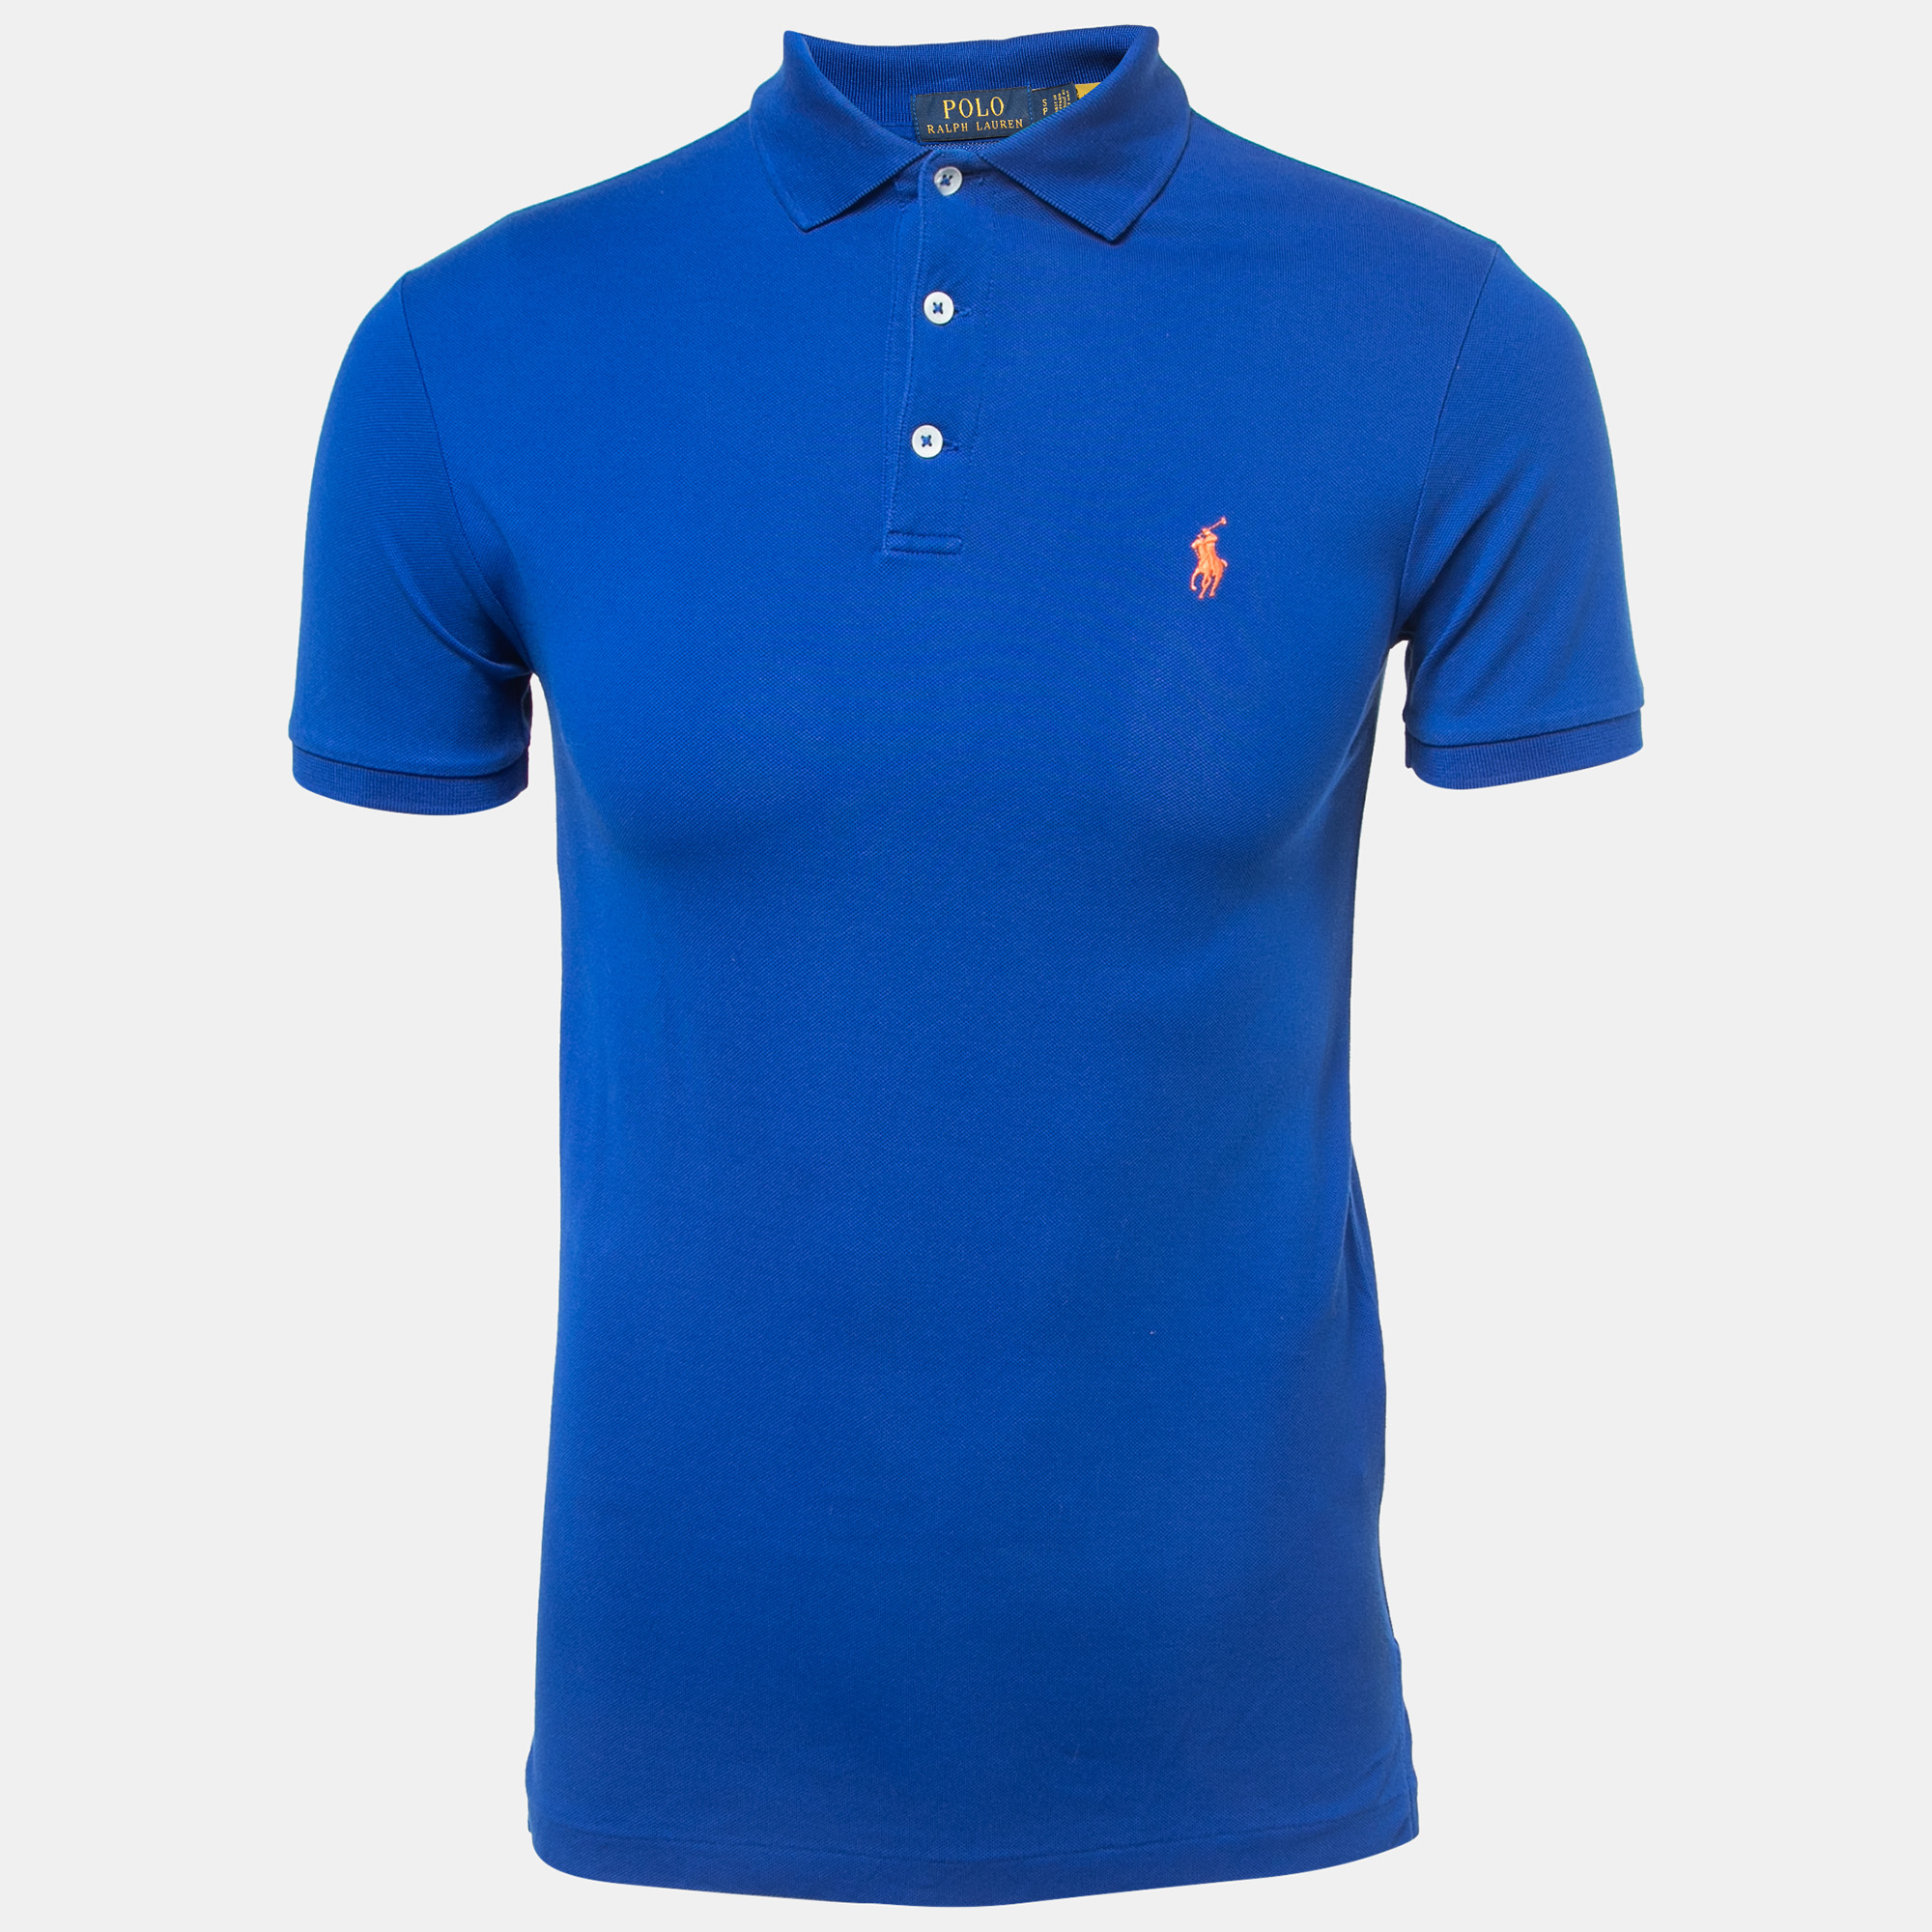 Polo Ralph Lauren Blue Cotton Stretch Mesh Slim Fit Polo T-Shirt S